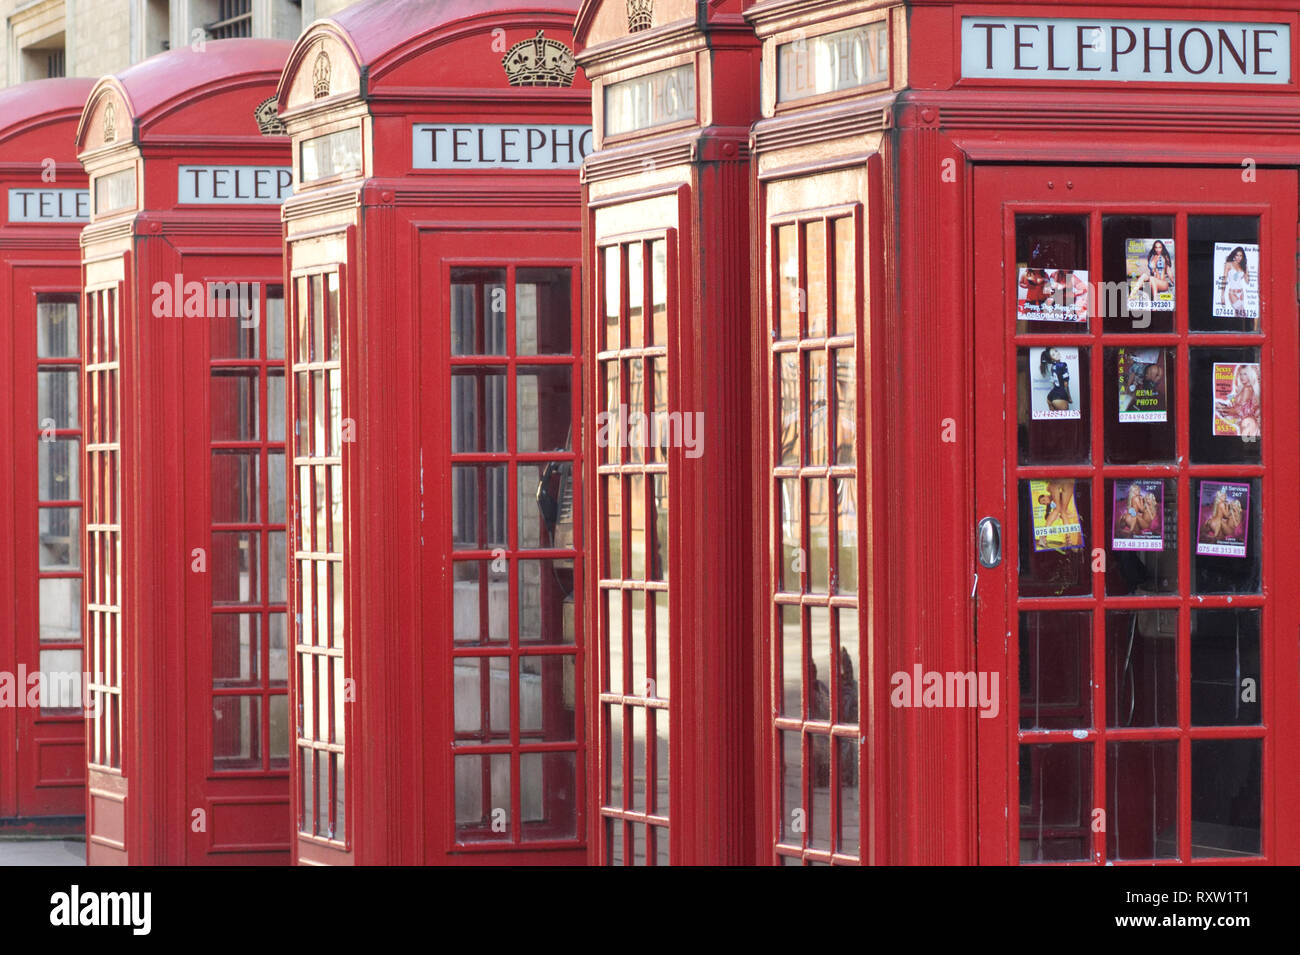 Public Telepgone boxes in London Stock Photo